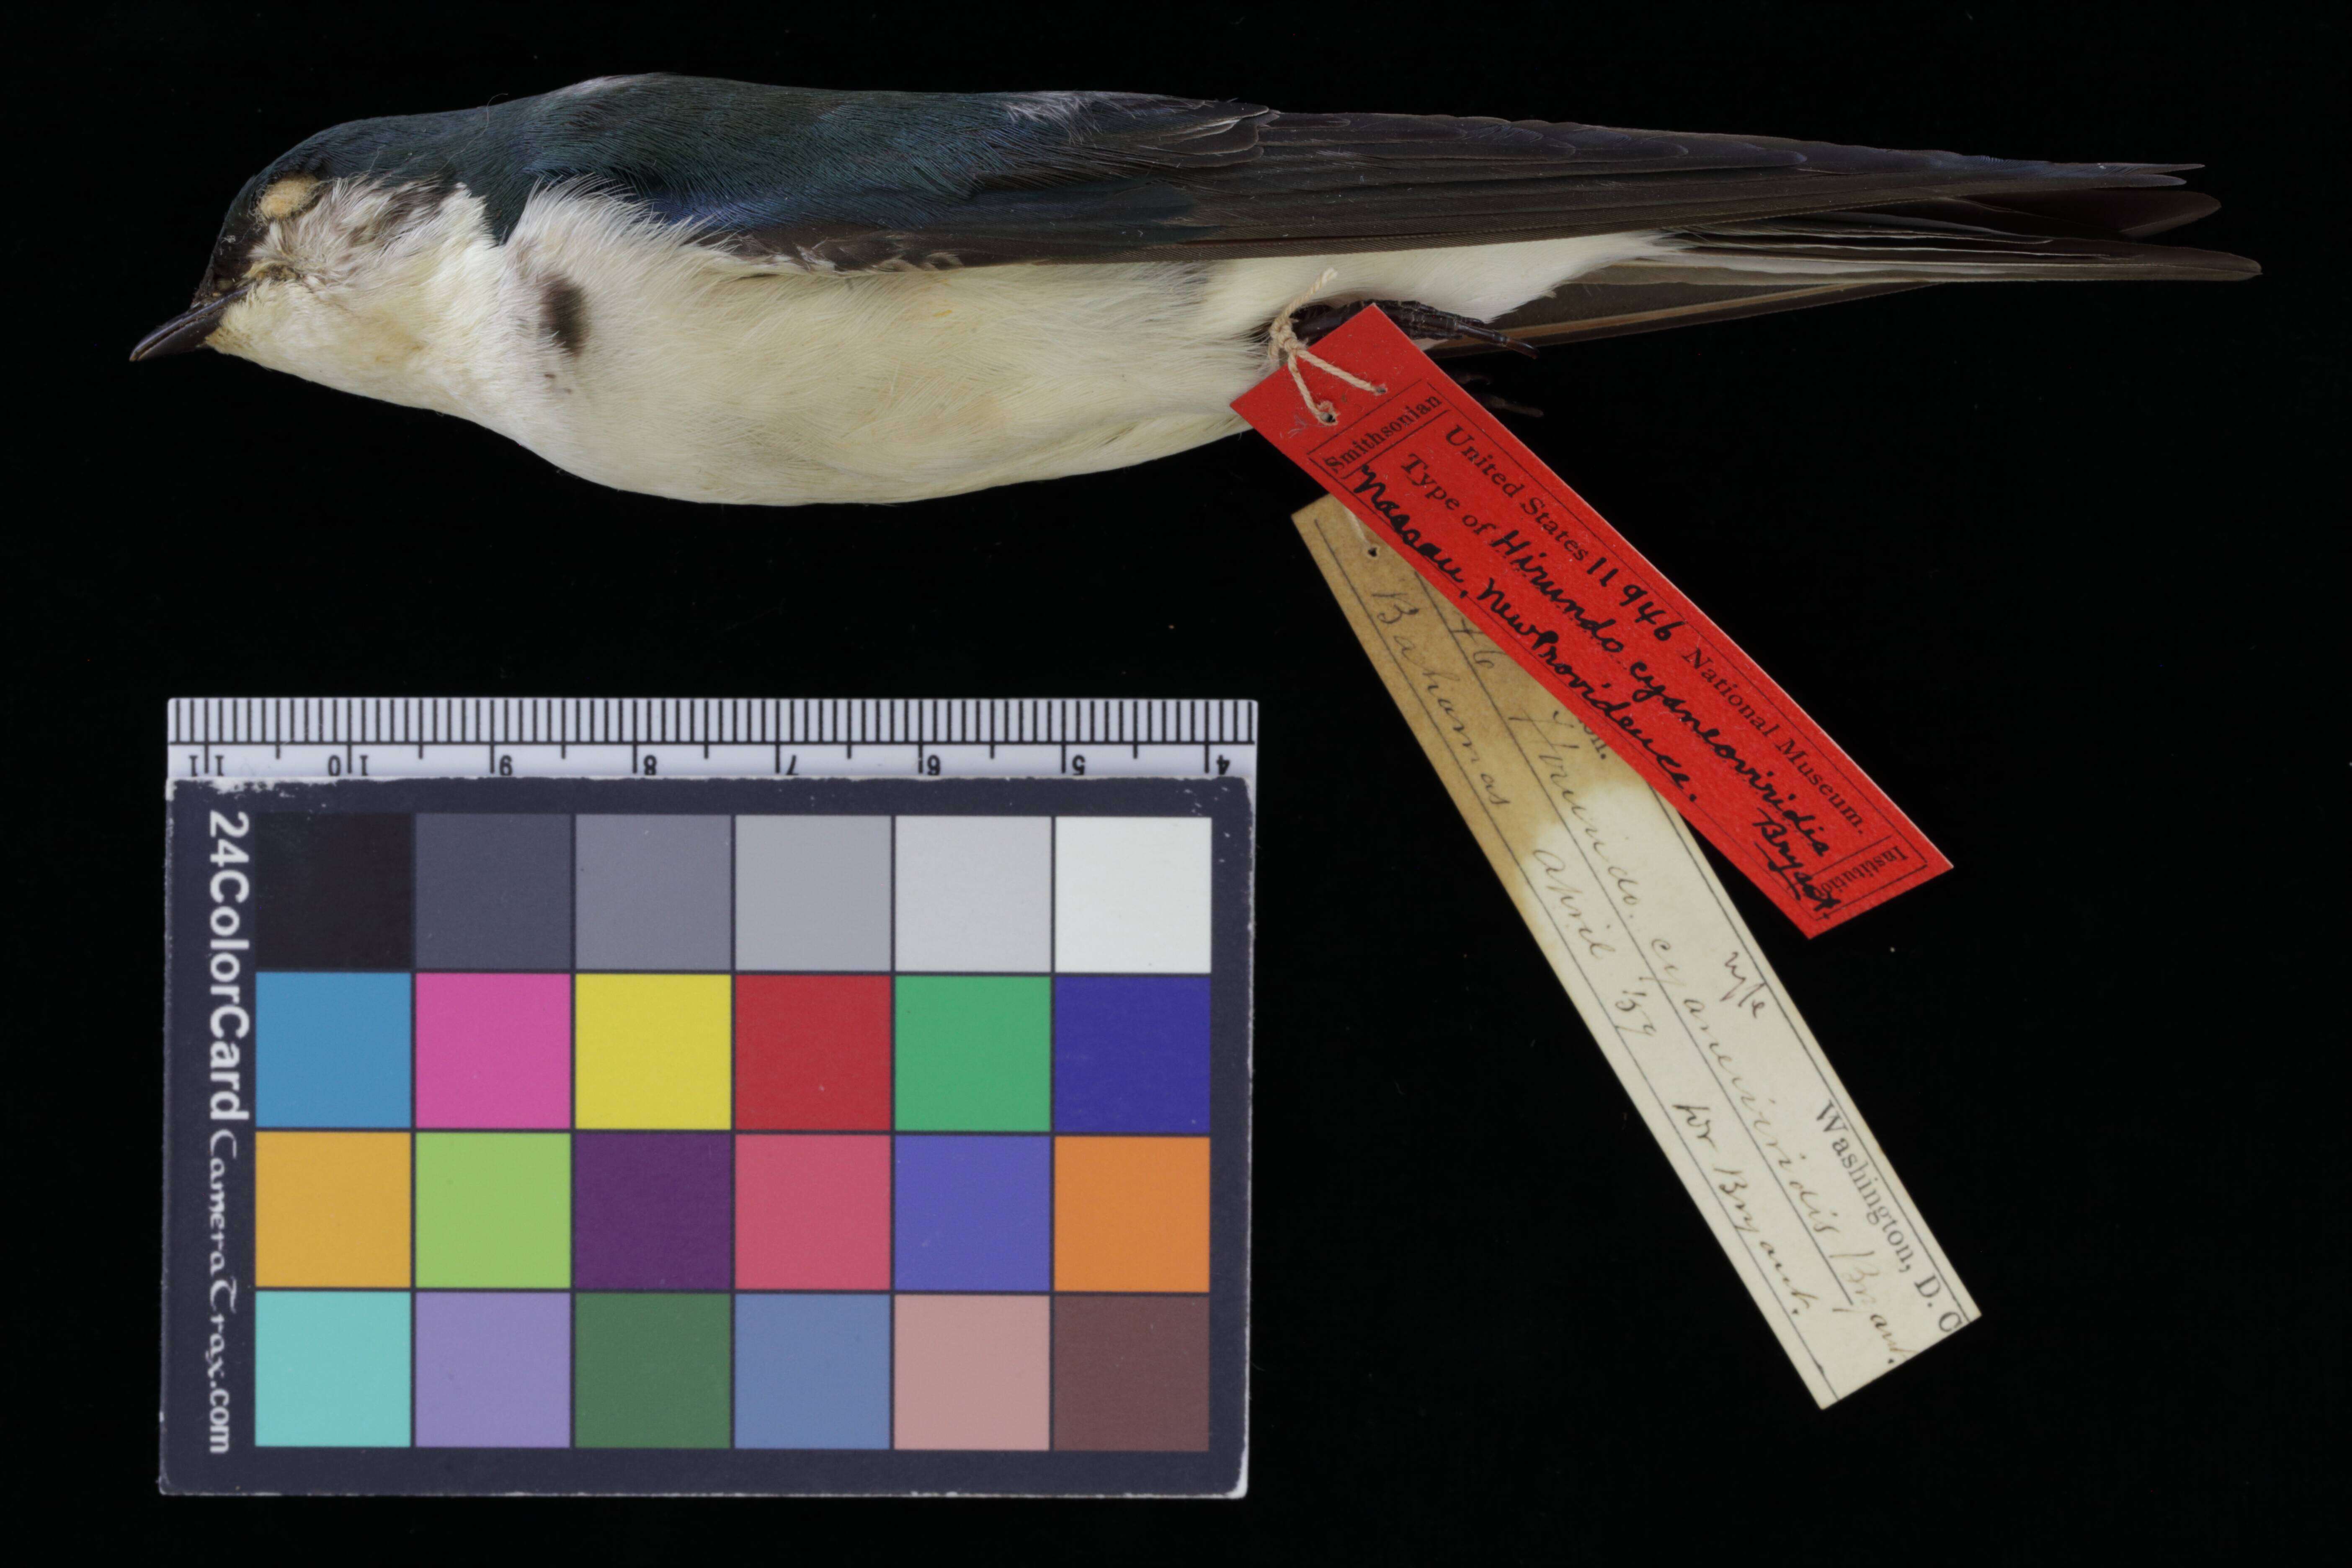 Image of Bahama Swallow